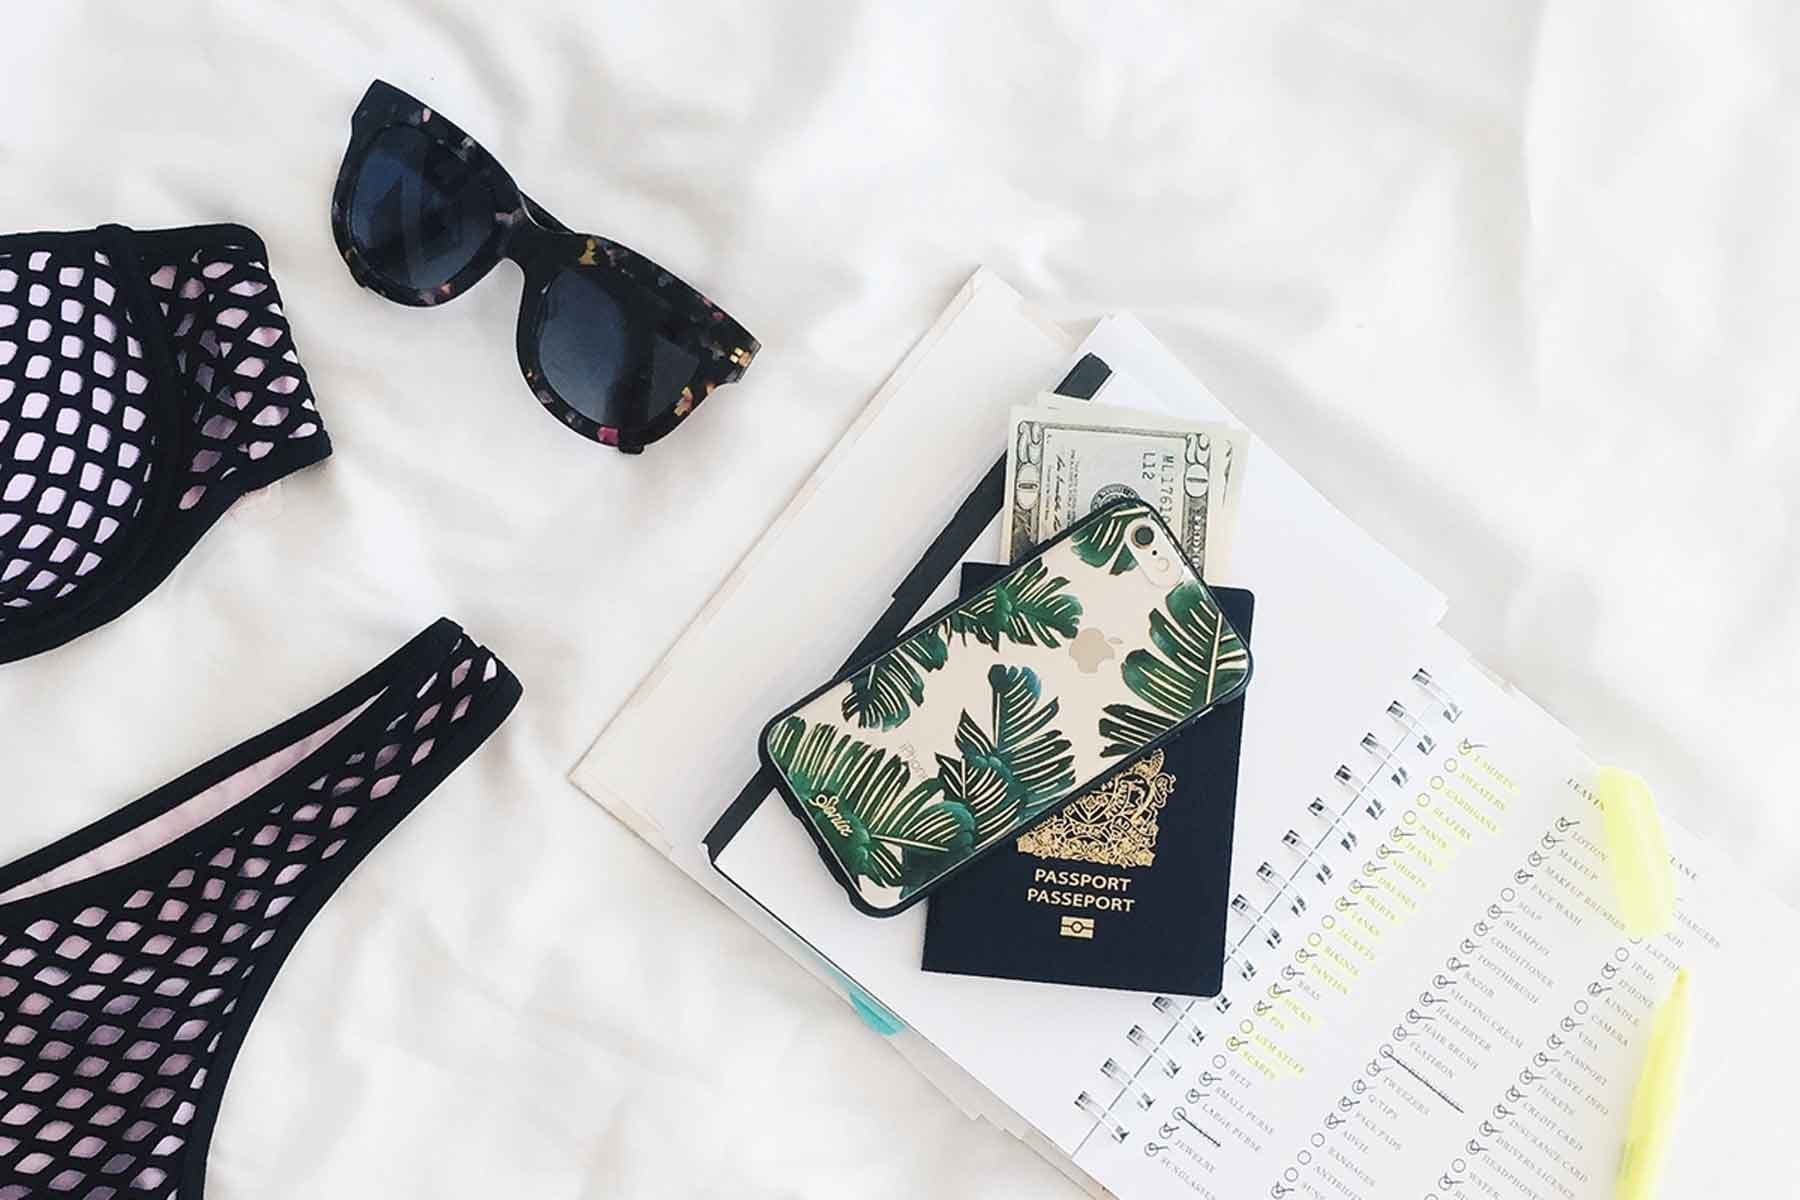 Photo of swimsuit, sunglasses, passport, cash, phone and planner